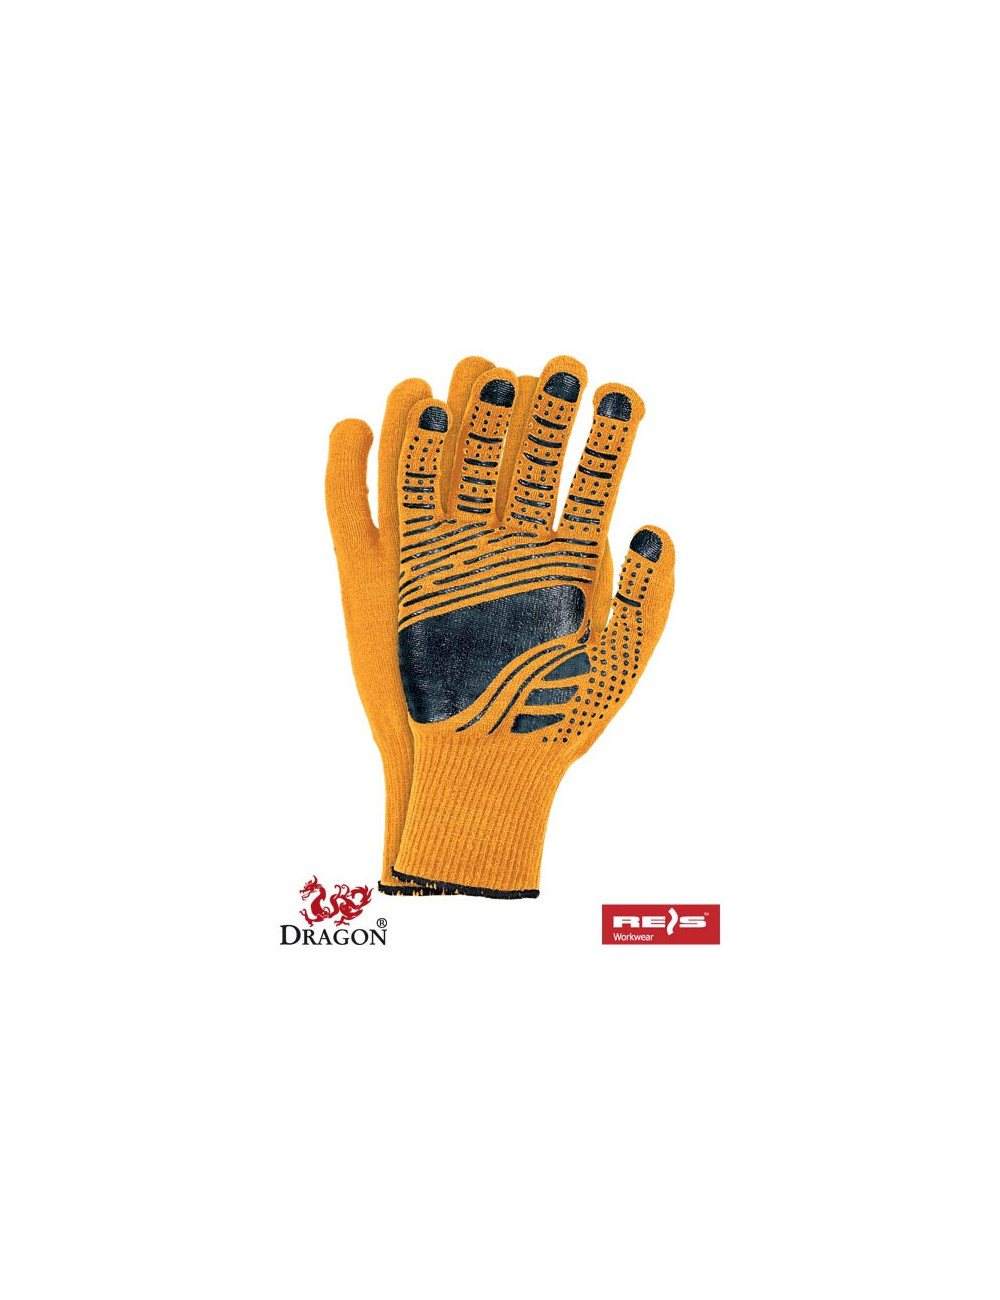 Protective gloves floatex-neo pb orange-black Reis